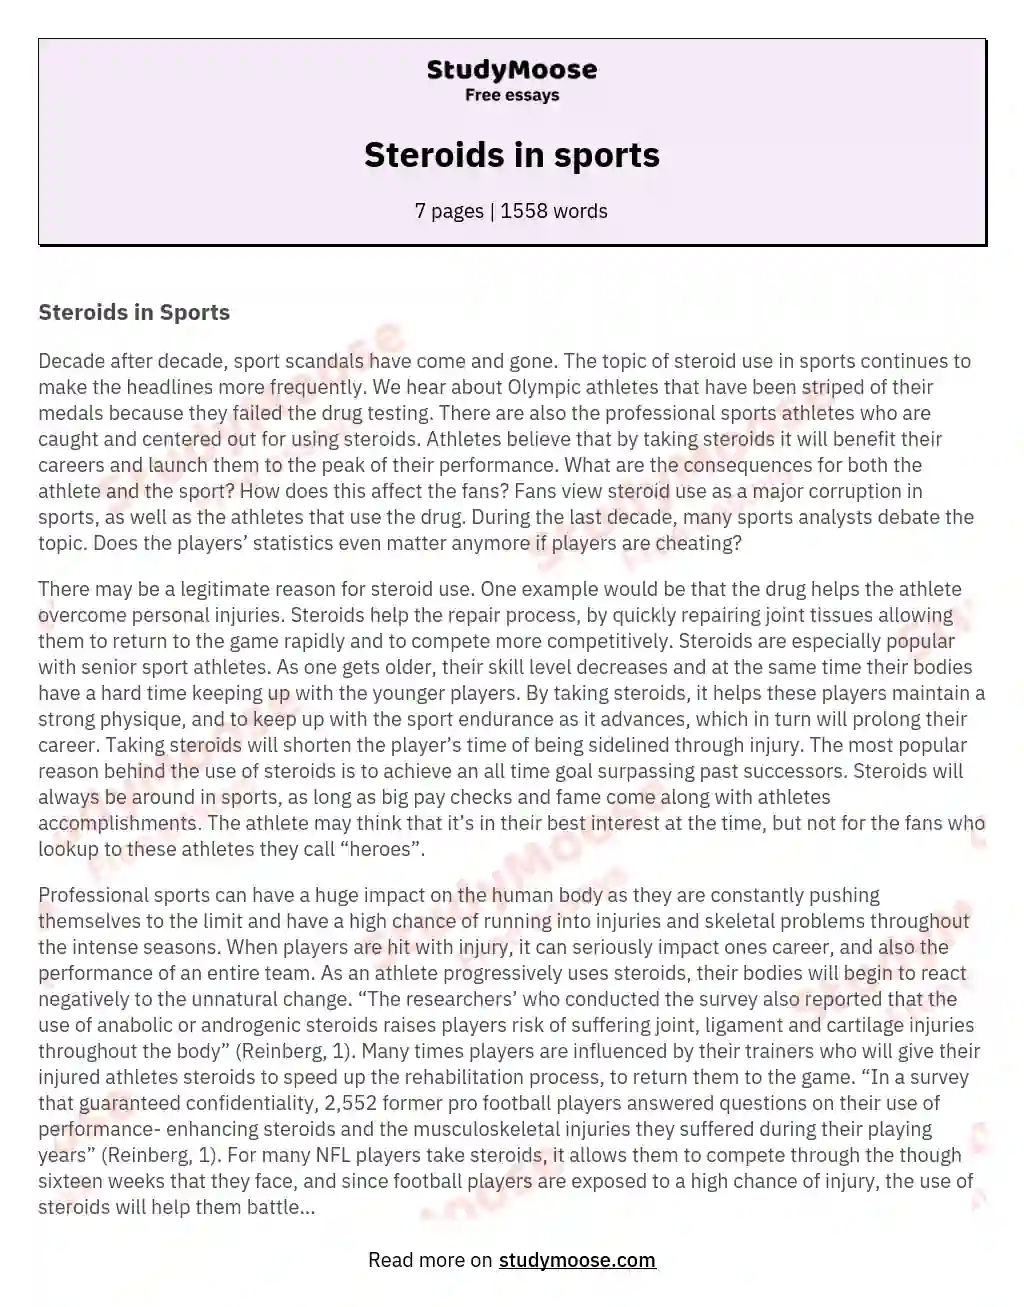 Steroids in sports essay